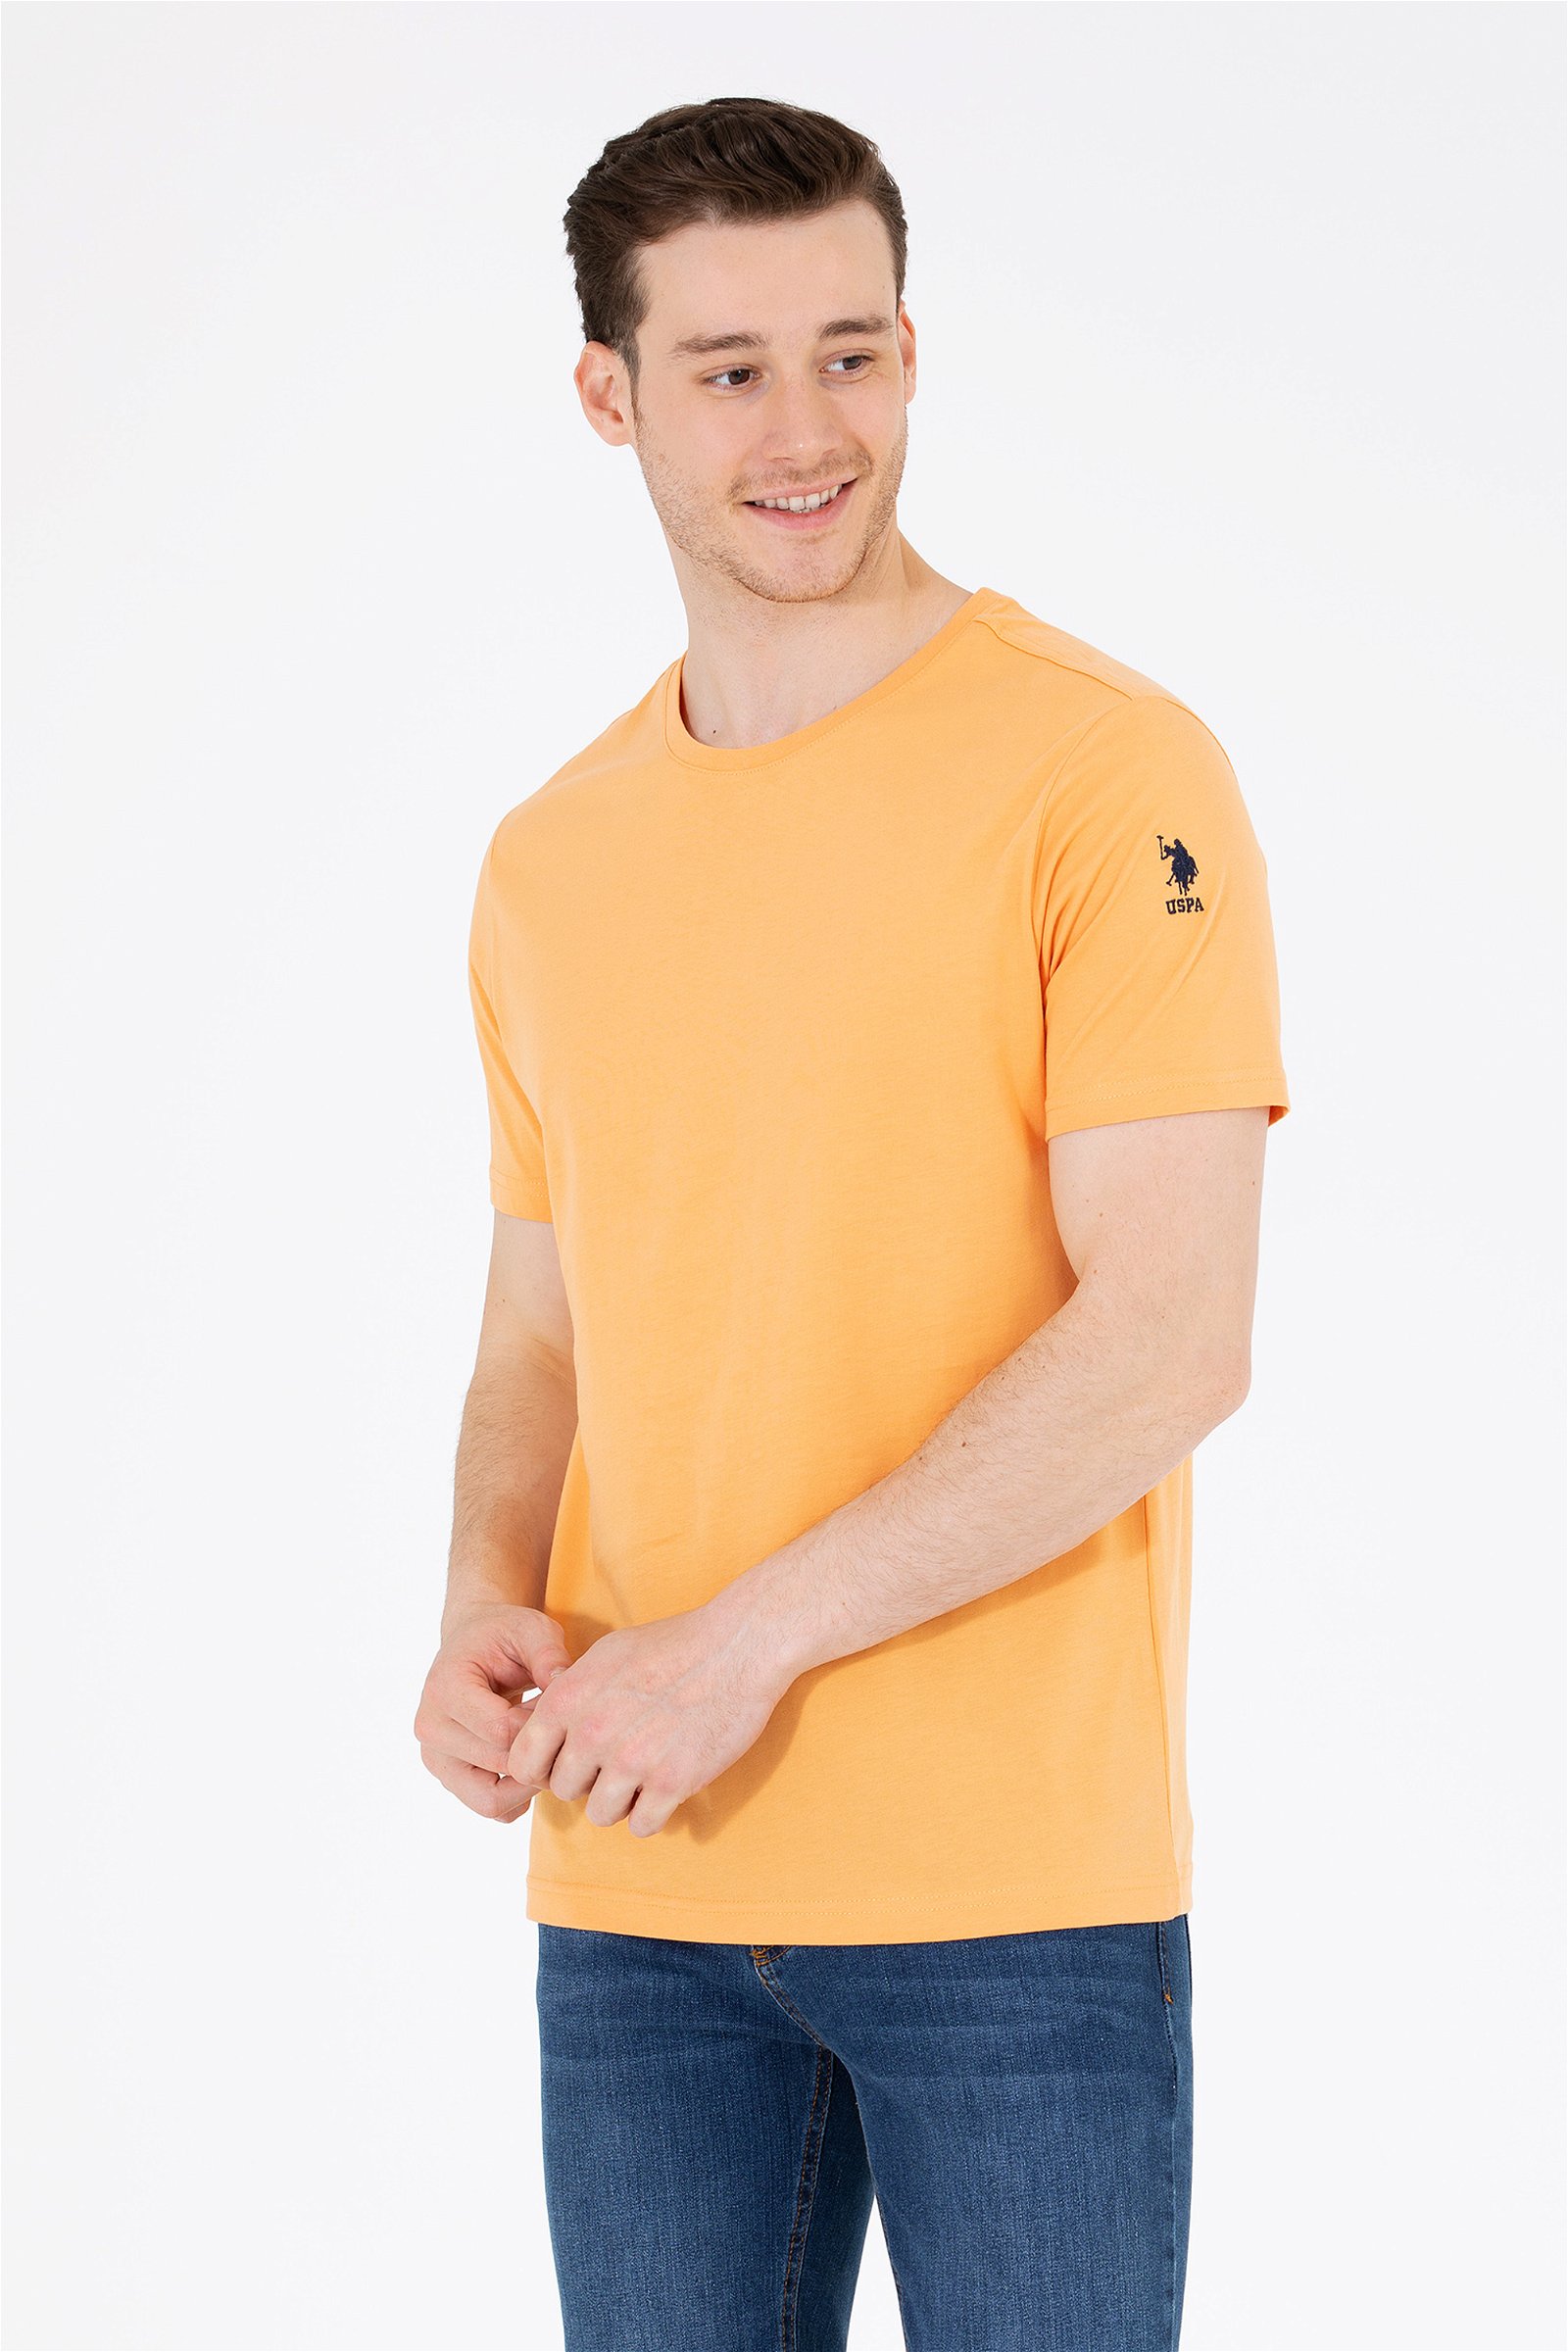 تی شرت یقه گرد زرد  رگولار آستین کوتاه مردانه یو اس پولو | US POLO ASSN